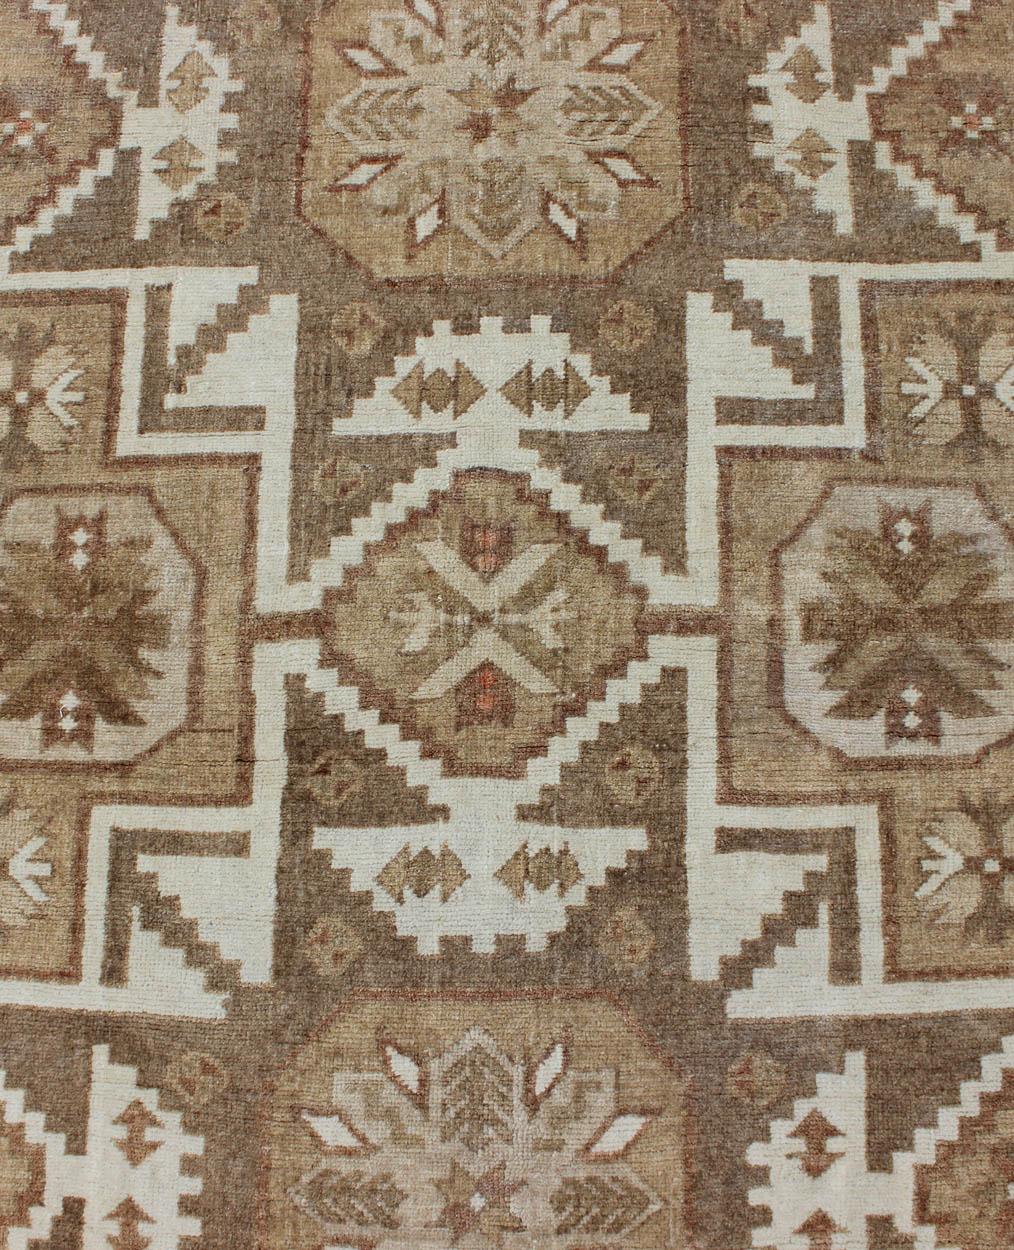 Tribal Turkish Vintage Rug with Starburst Pendants in Ivory, Green & Light Brown For Sale 1